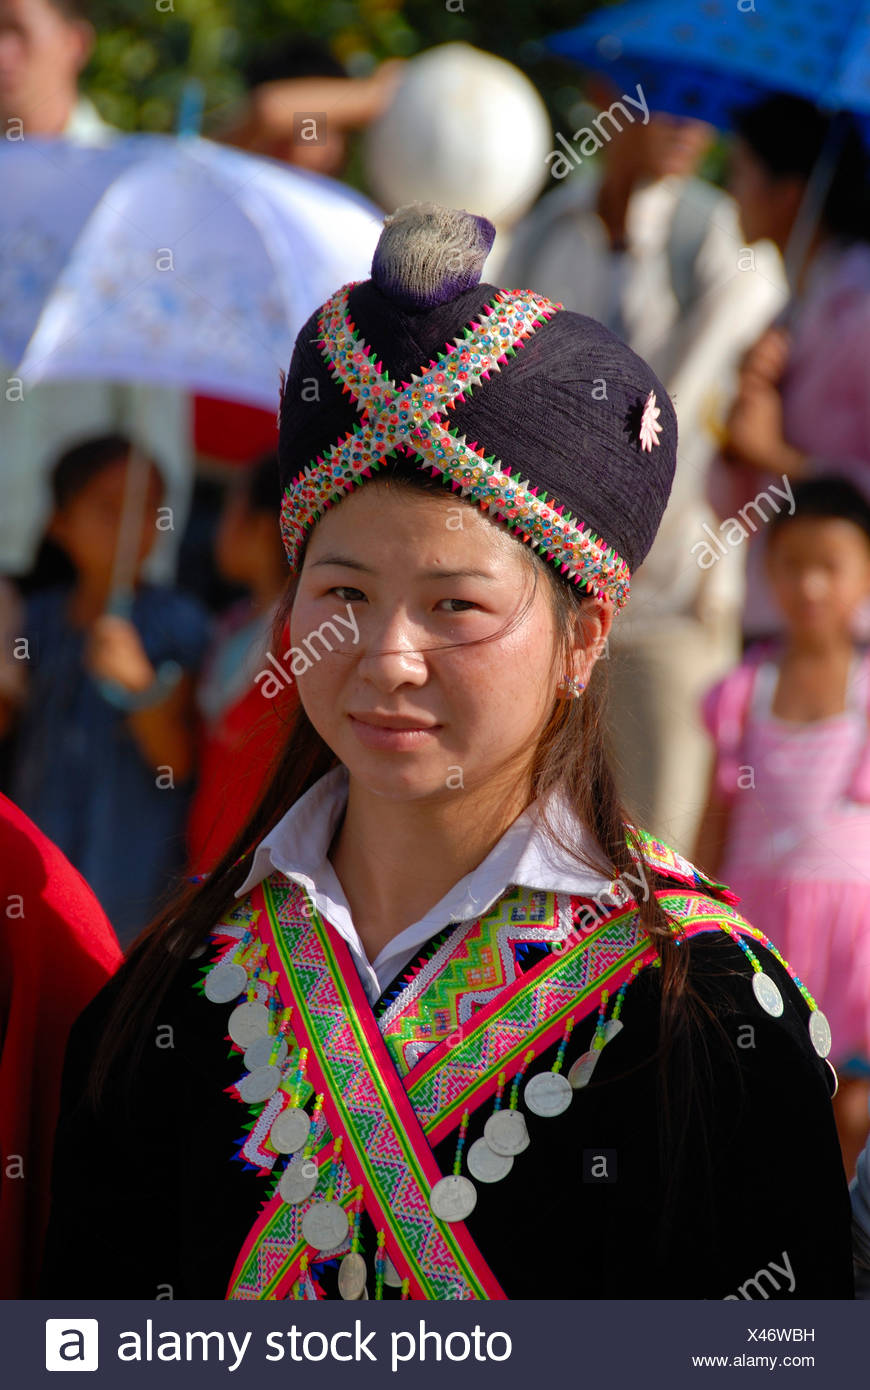 dating hmong woman